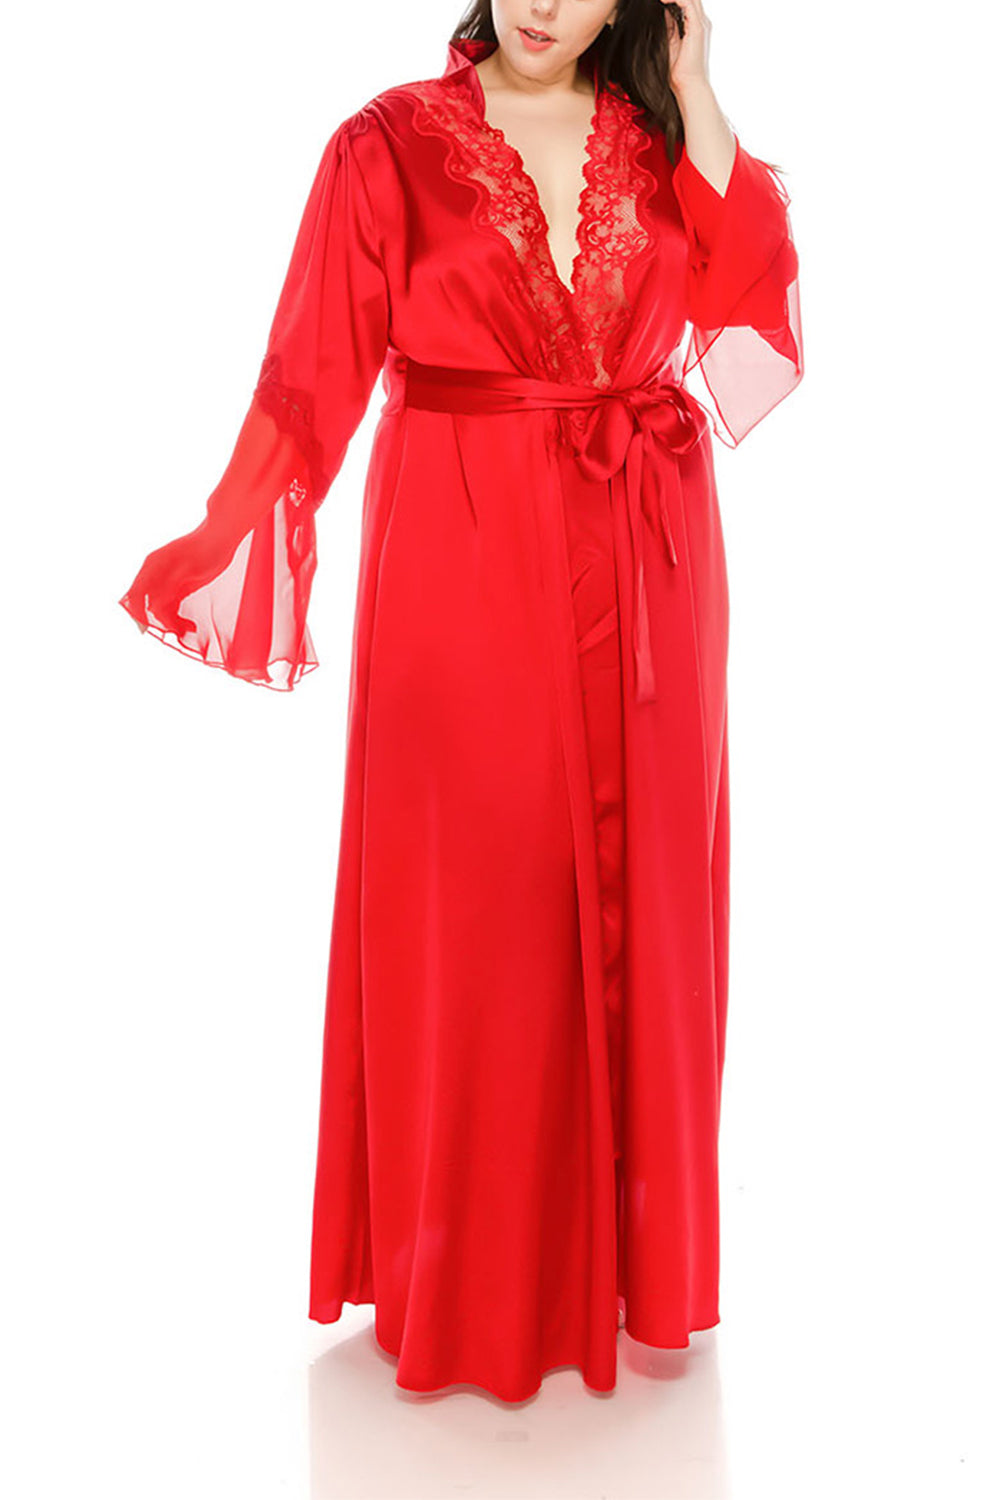 Long Satin Robes w/Lace for Plus Size Lingerie Silk Bathrobe